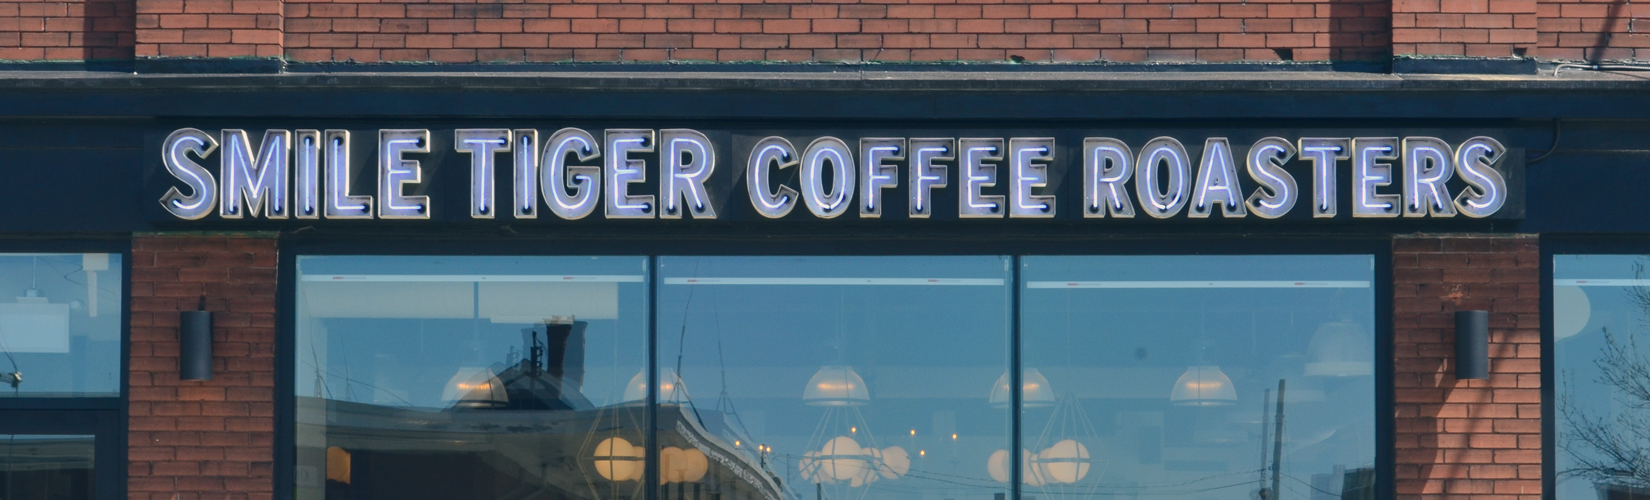 IveBeenBit.ca :: Smile Tiger Coffee Roasters